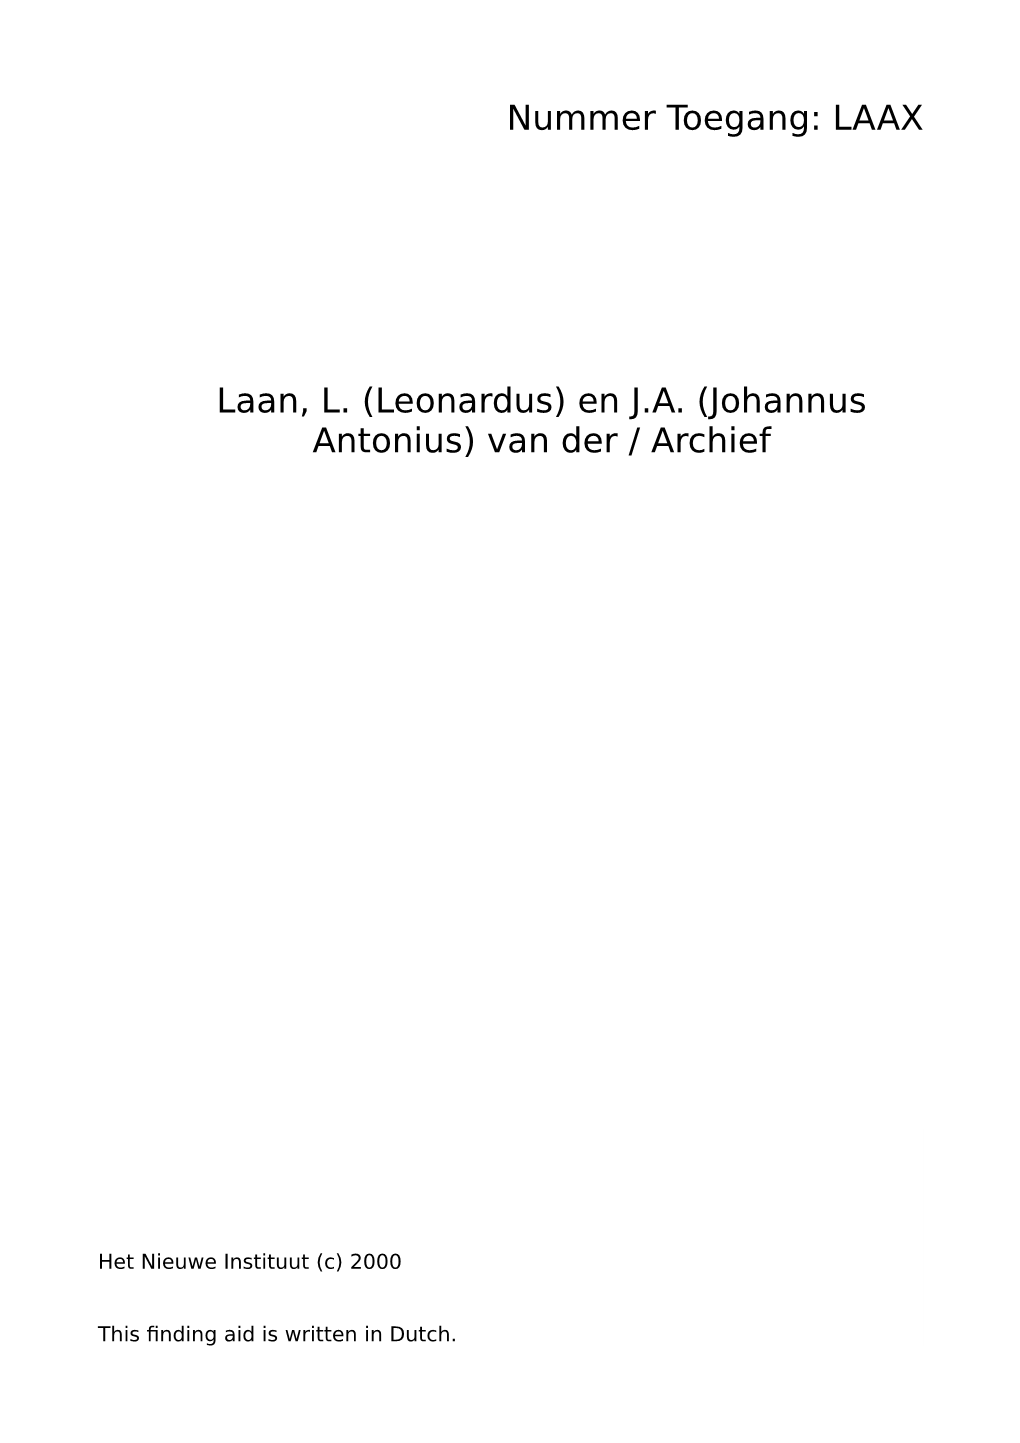 LAAX Laan, L. (Leonardus) En JA (Johannus Antonius) Van Der / Archief